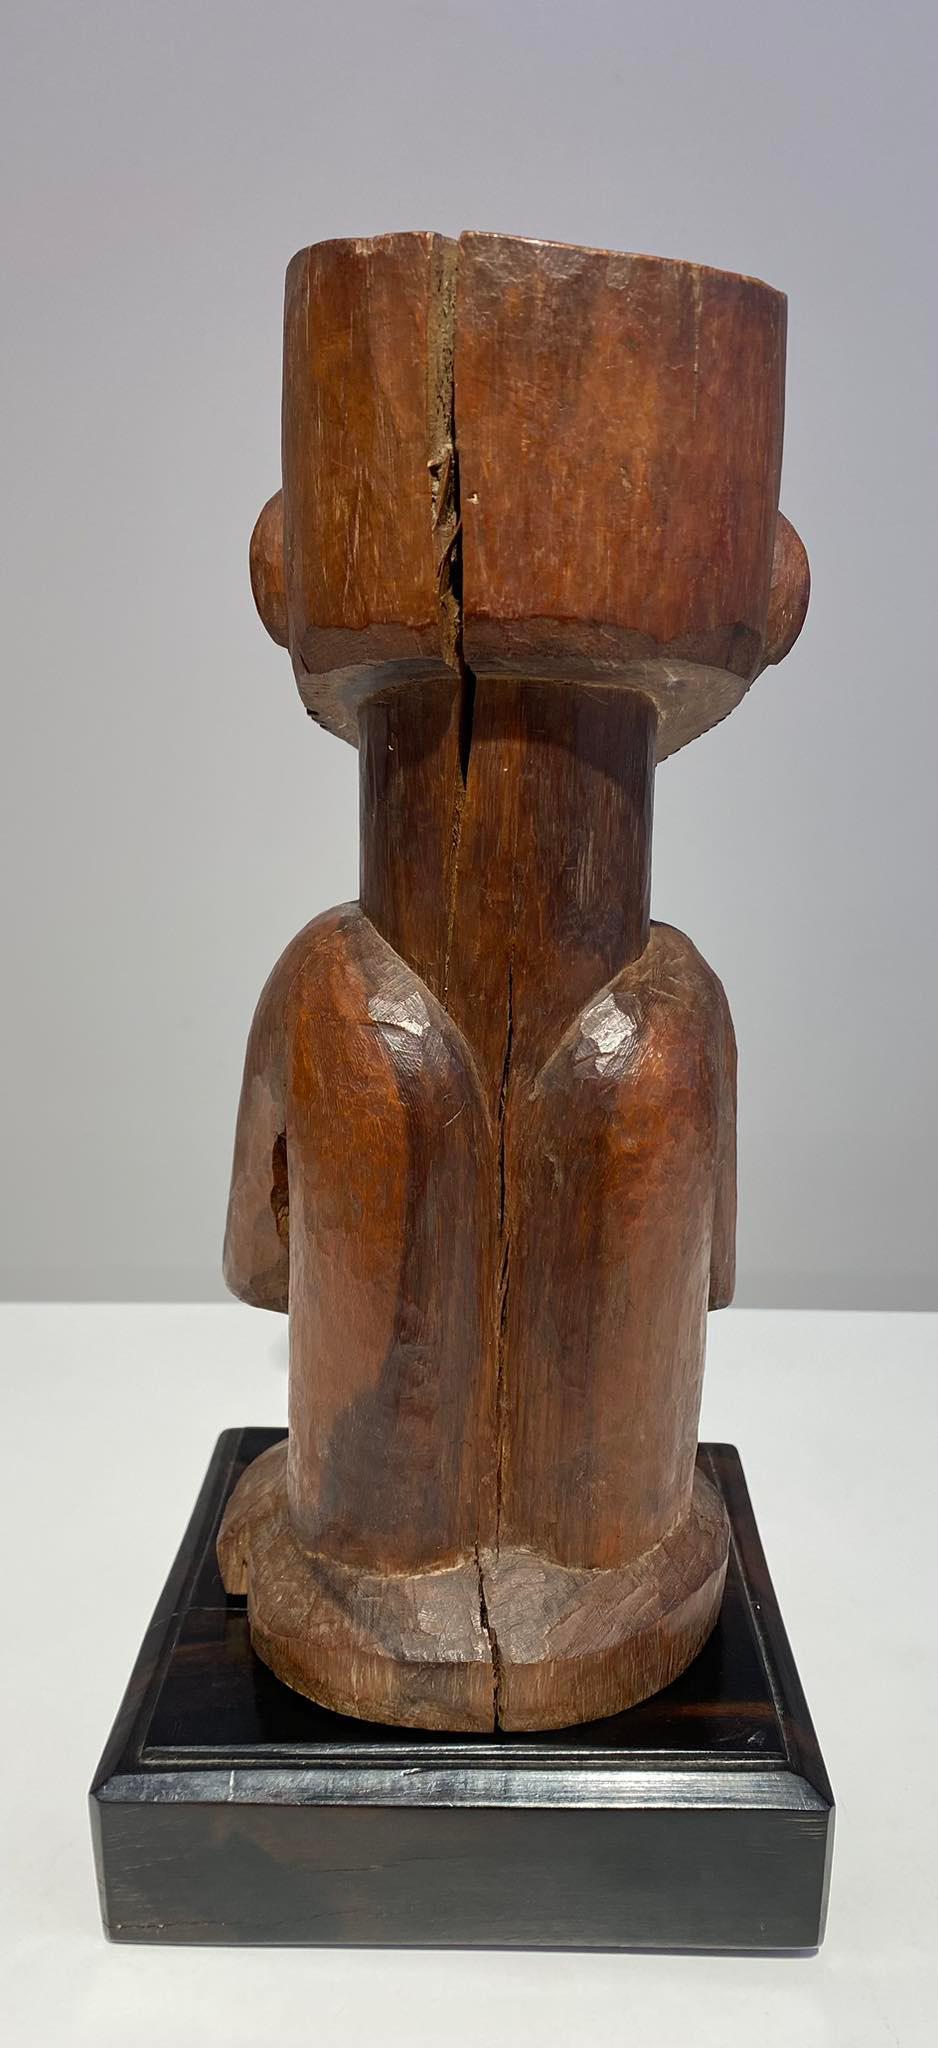 Kusu wooden ancestor fetish ca 1900 DR Congo Africa Central African Tribal Art For Sale 1